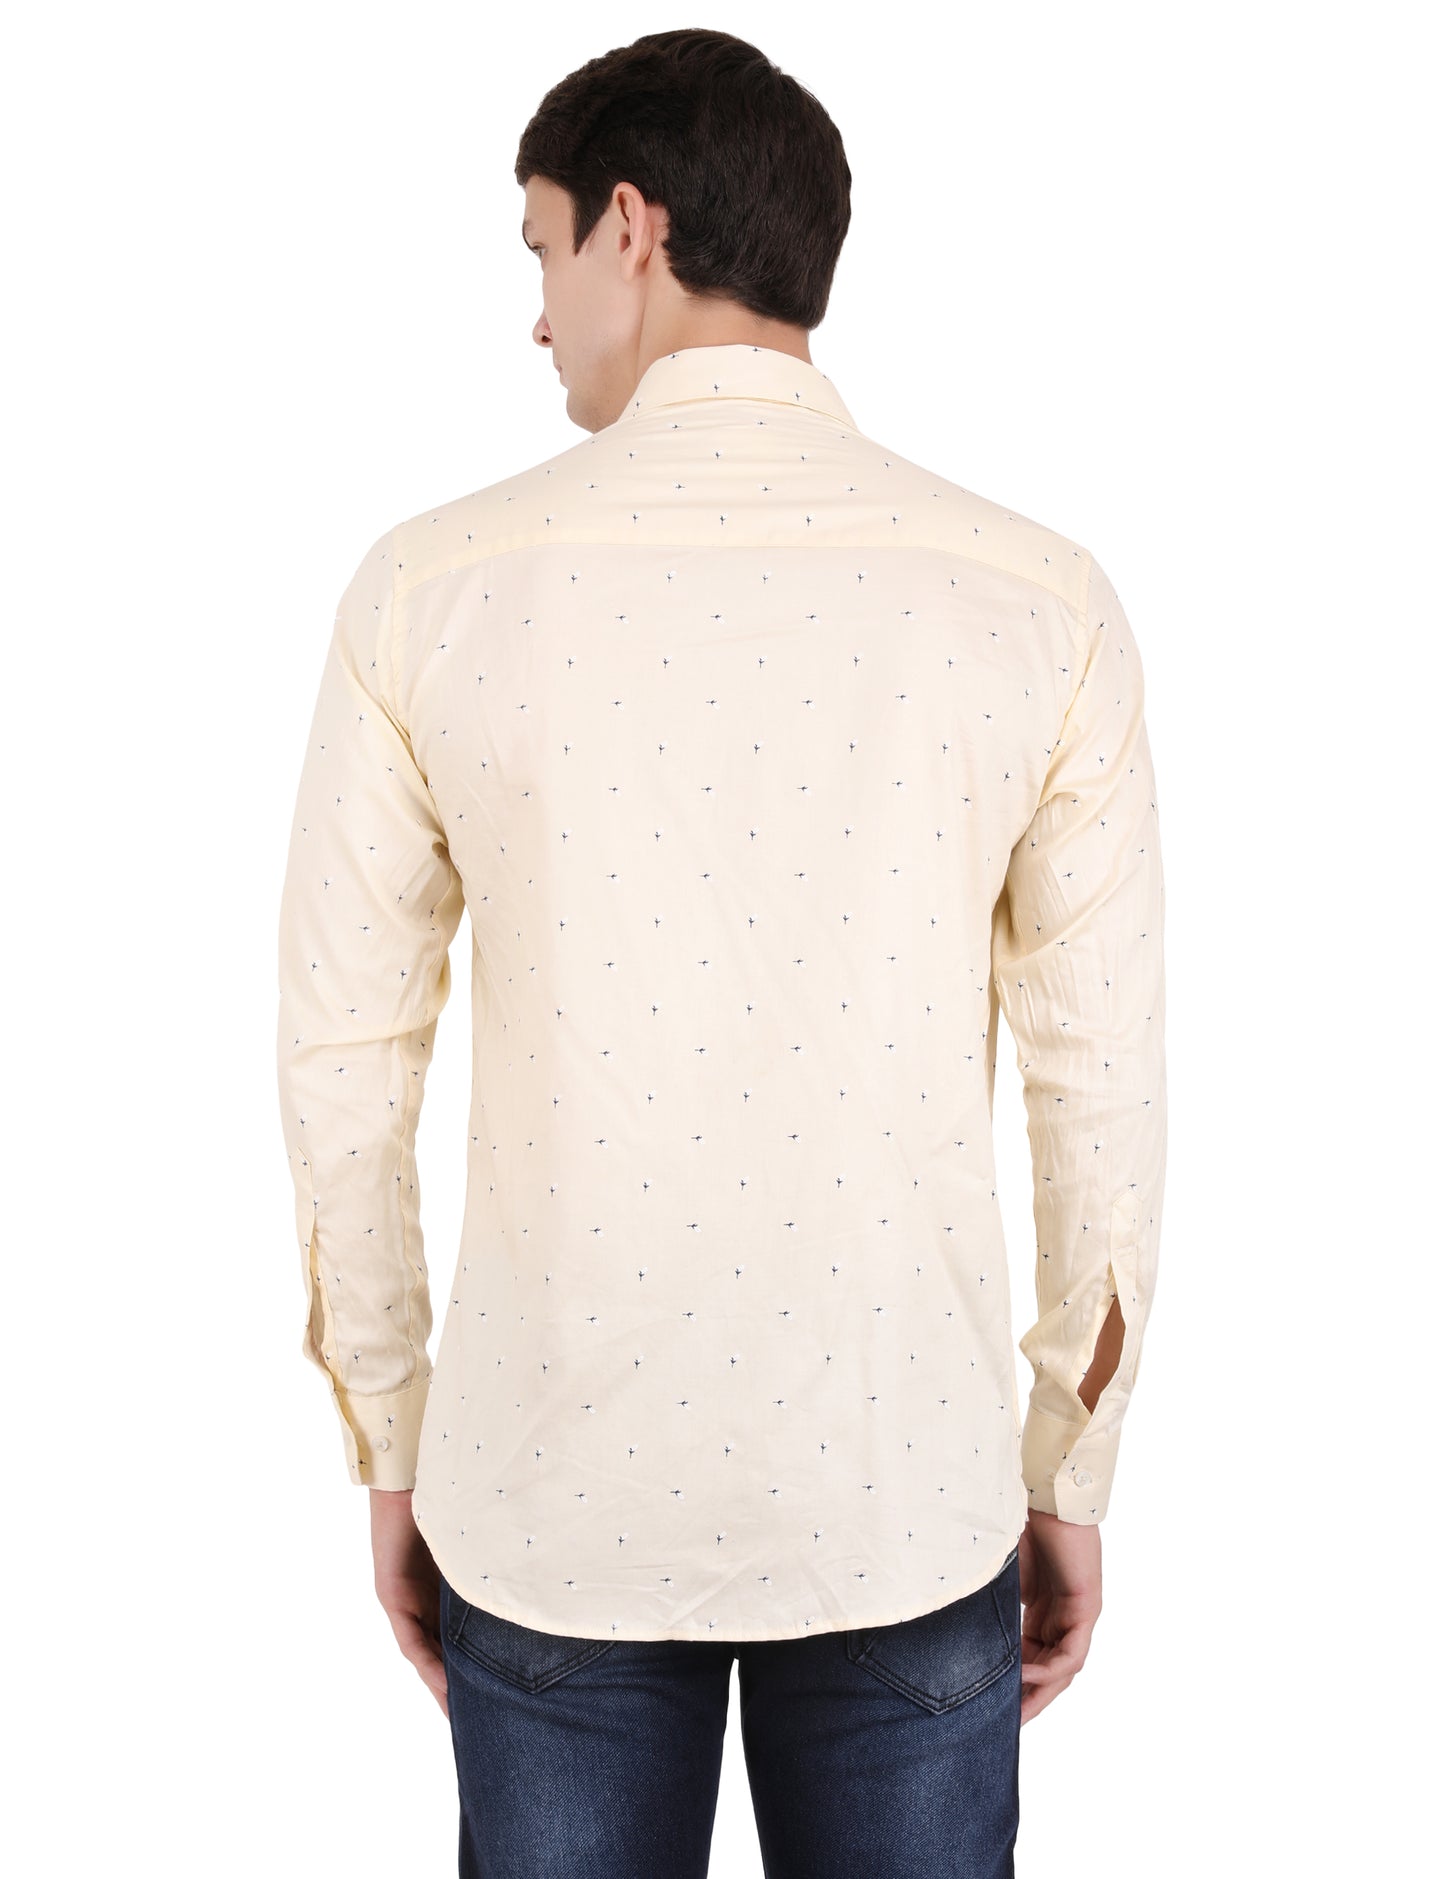 Minimal Leaf Print Yellow Shirt - Stylish Men's Fashion | Shop Now